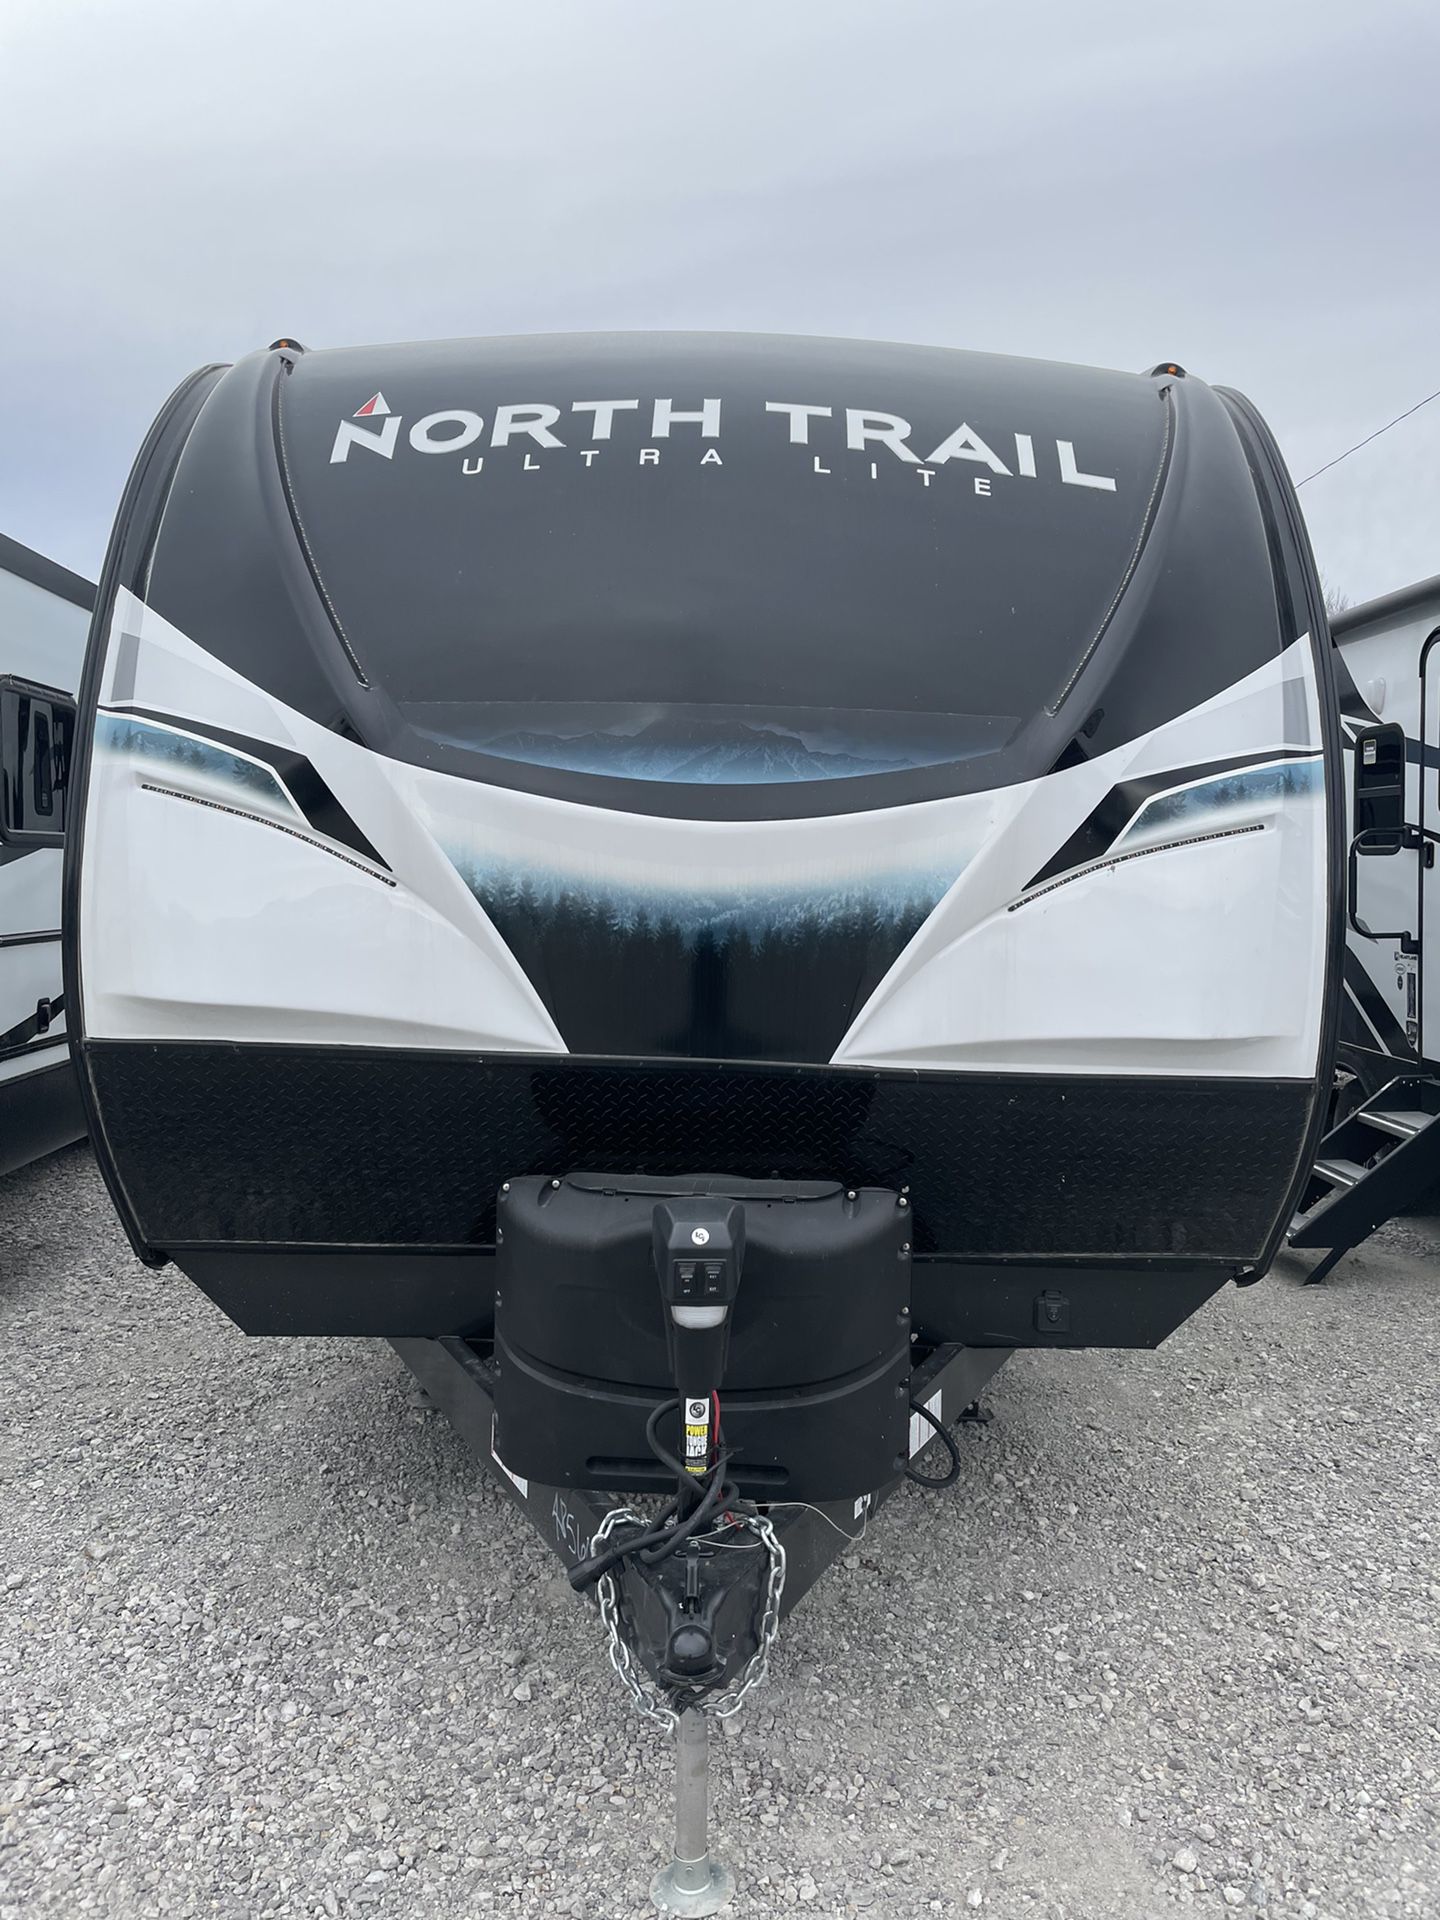 2022 Heartland North Trail